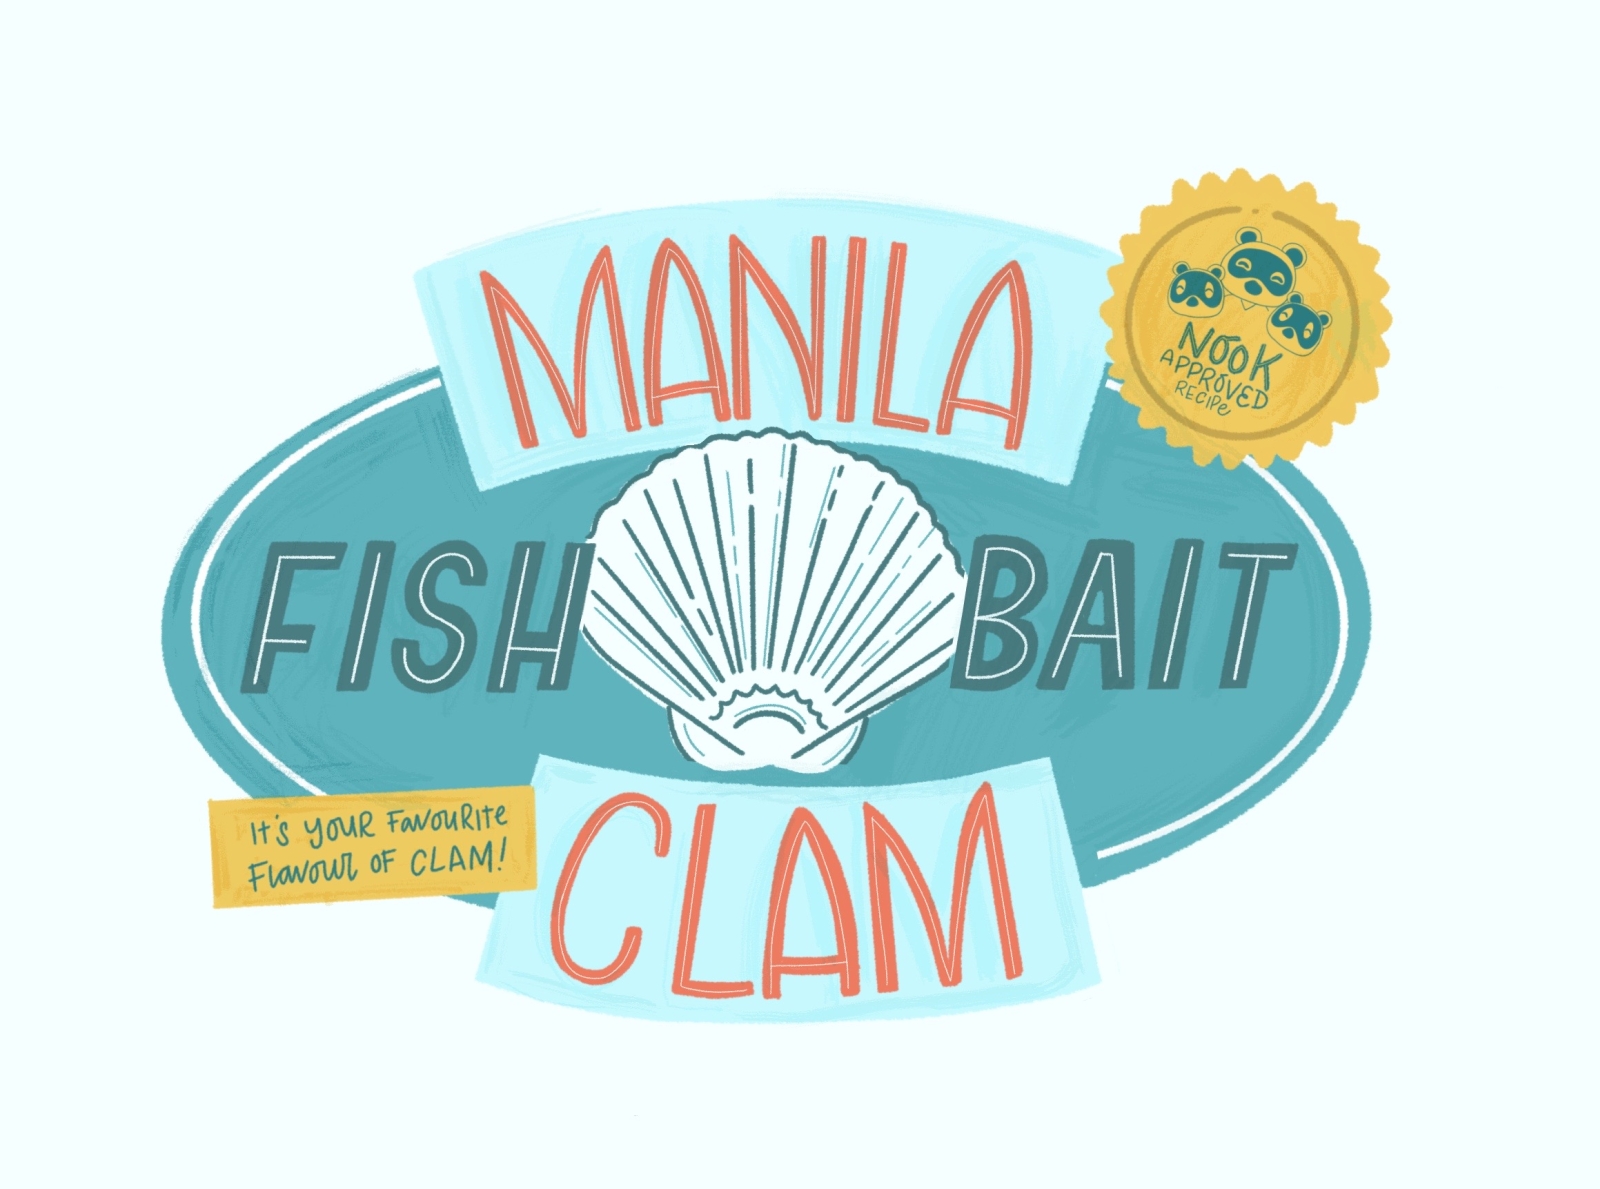 Animal Crossing - Manila clam fish bait logo by Jess Bright on Dribbble